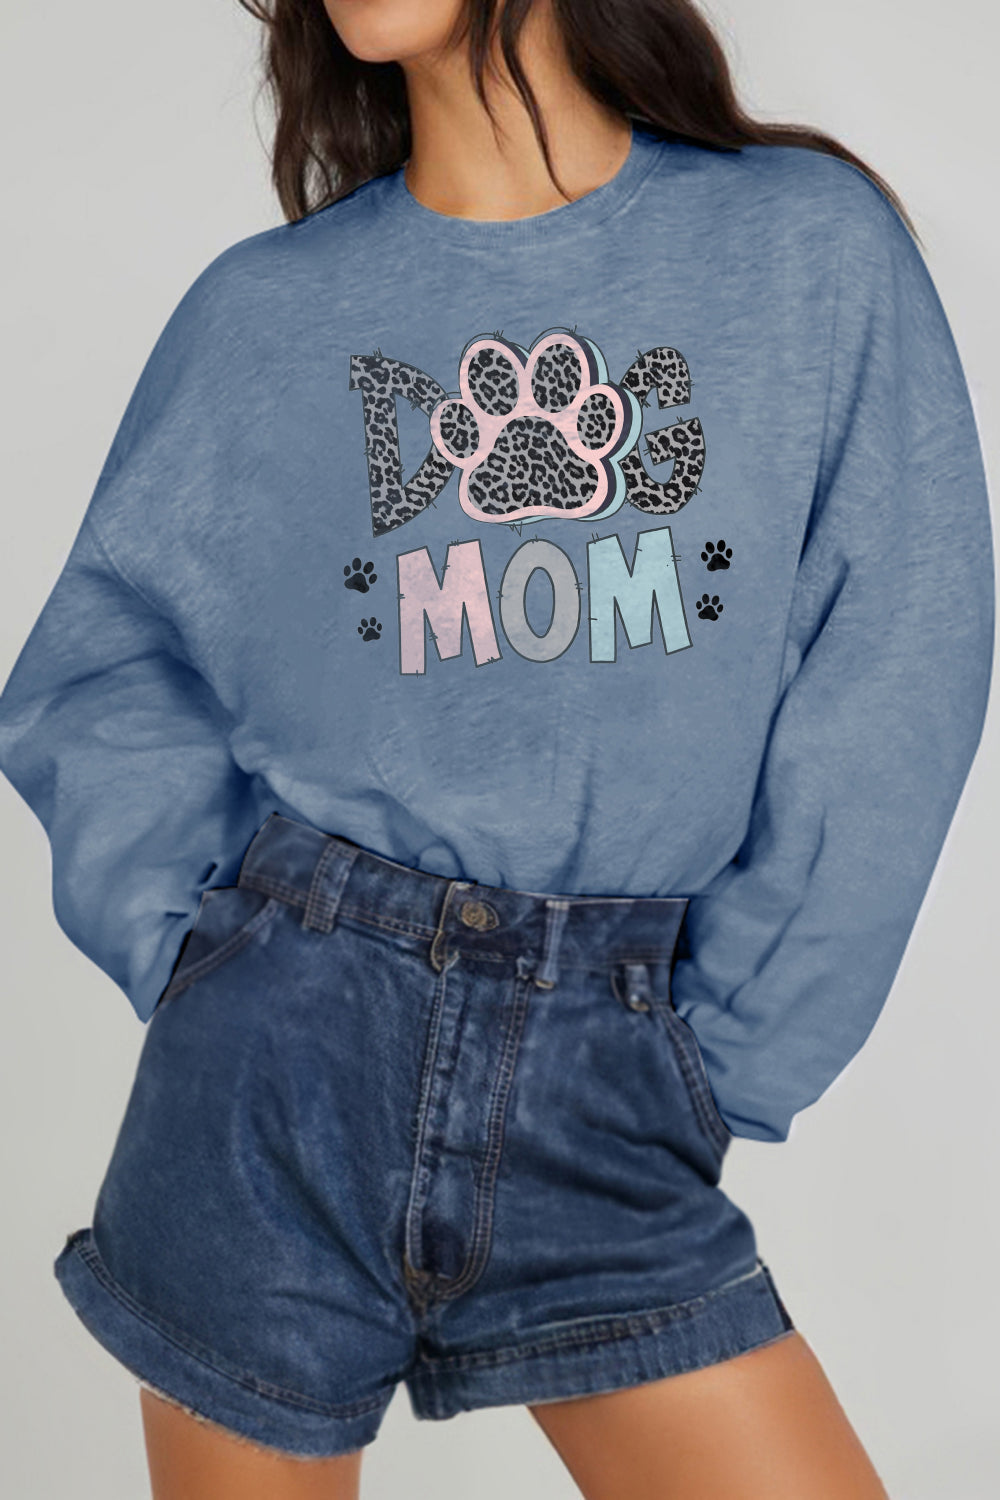 DOG MOM Graphic Sweatshirt